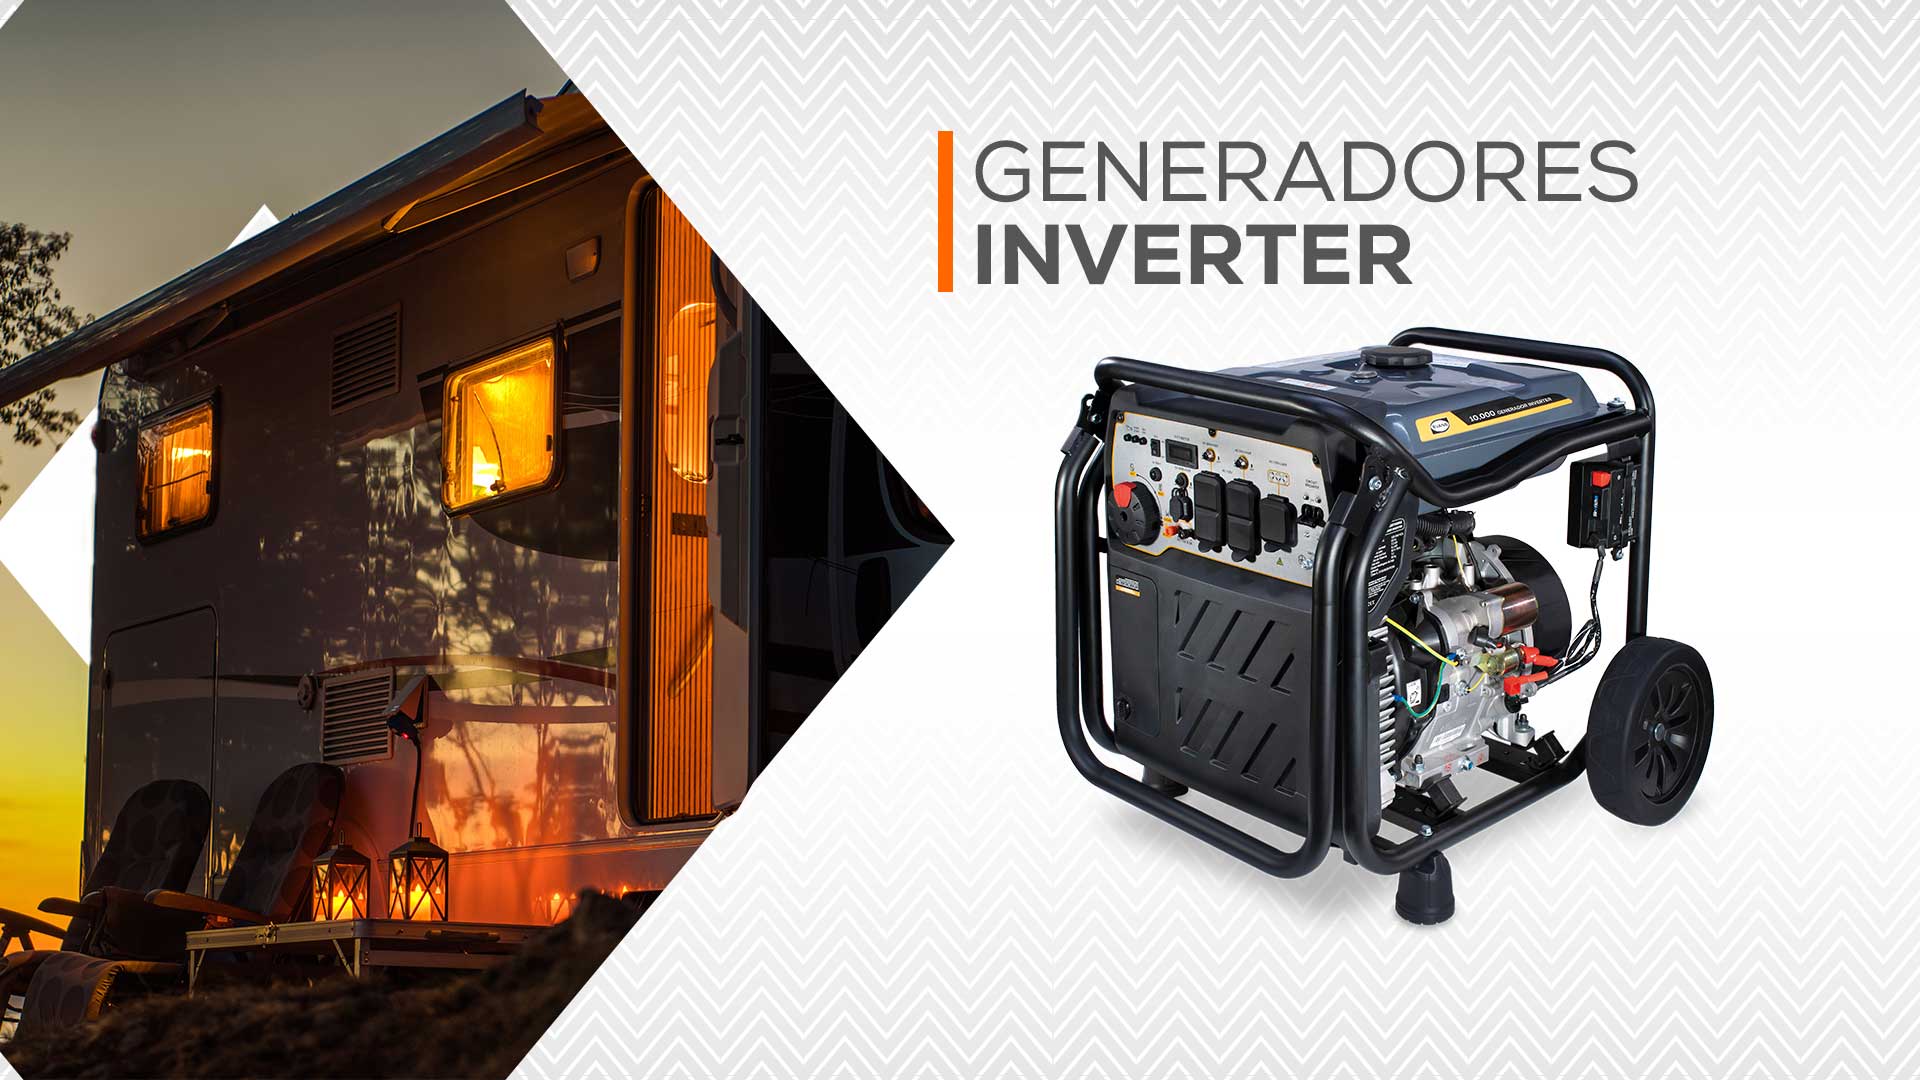 Generador inverter